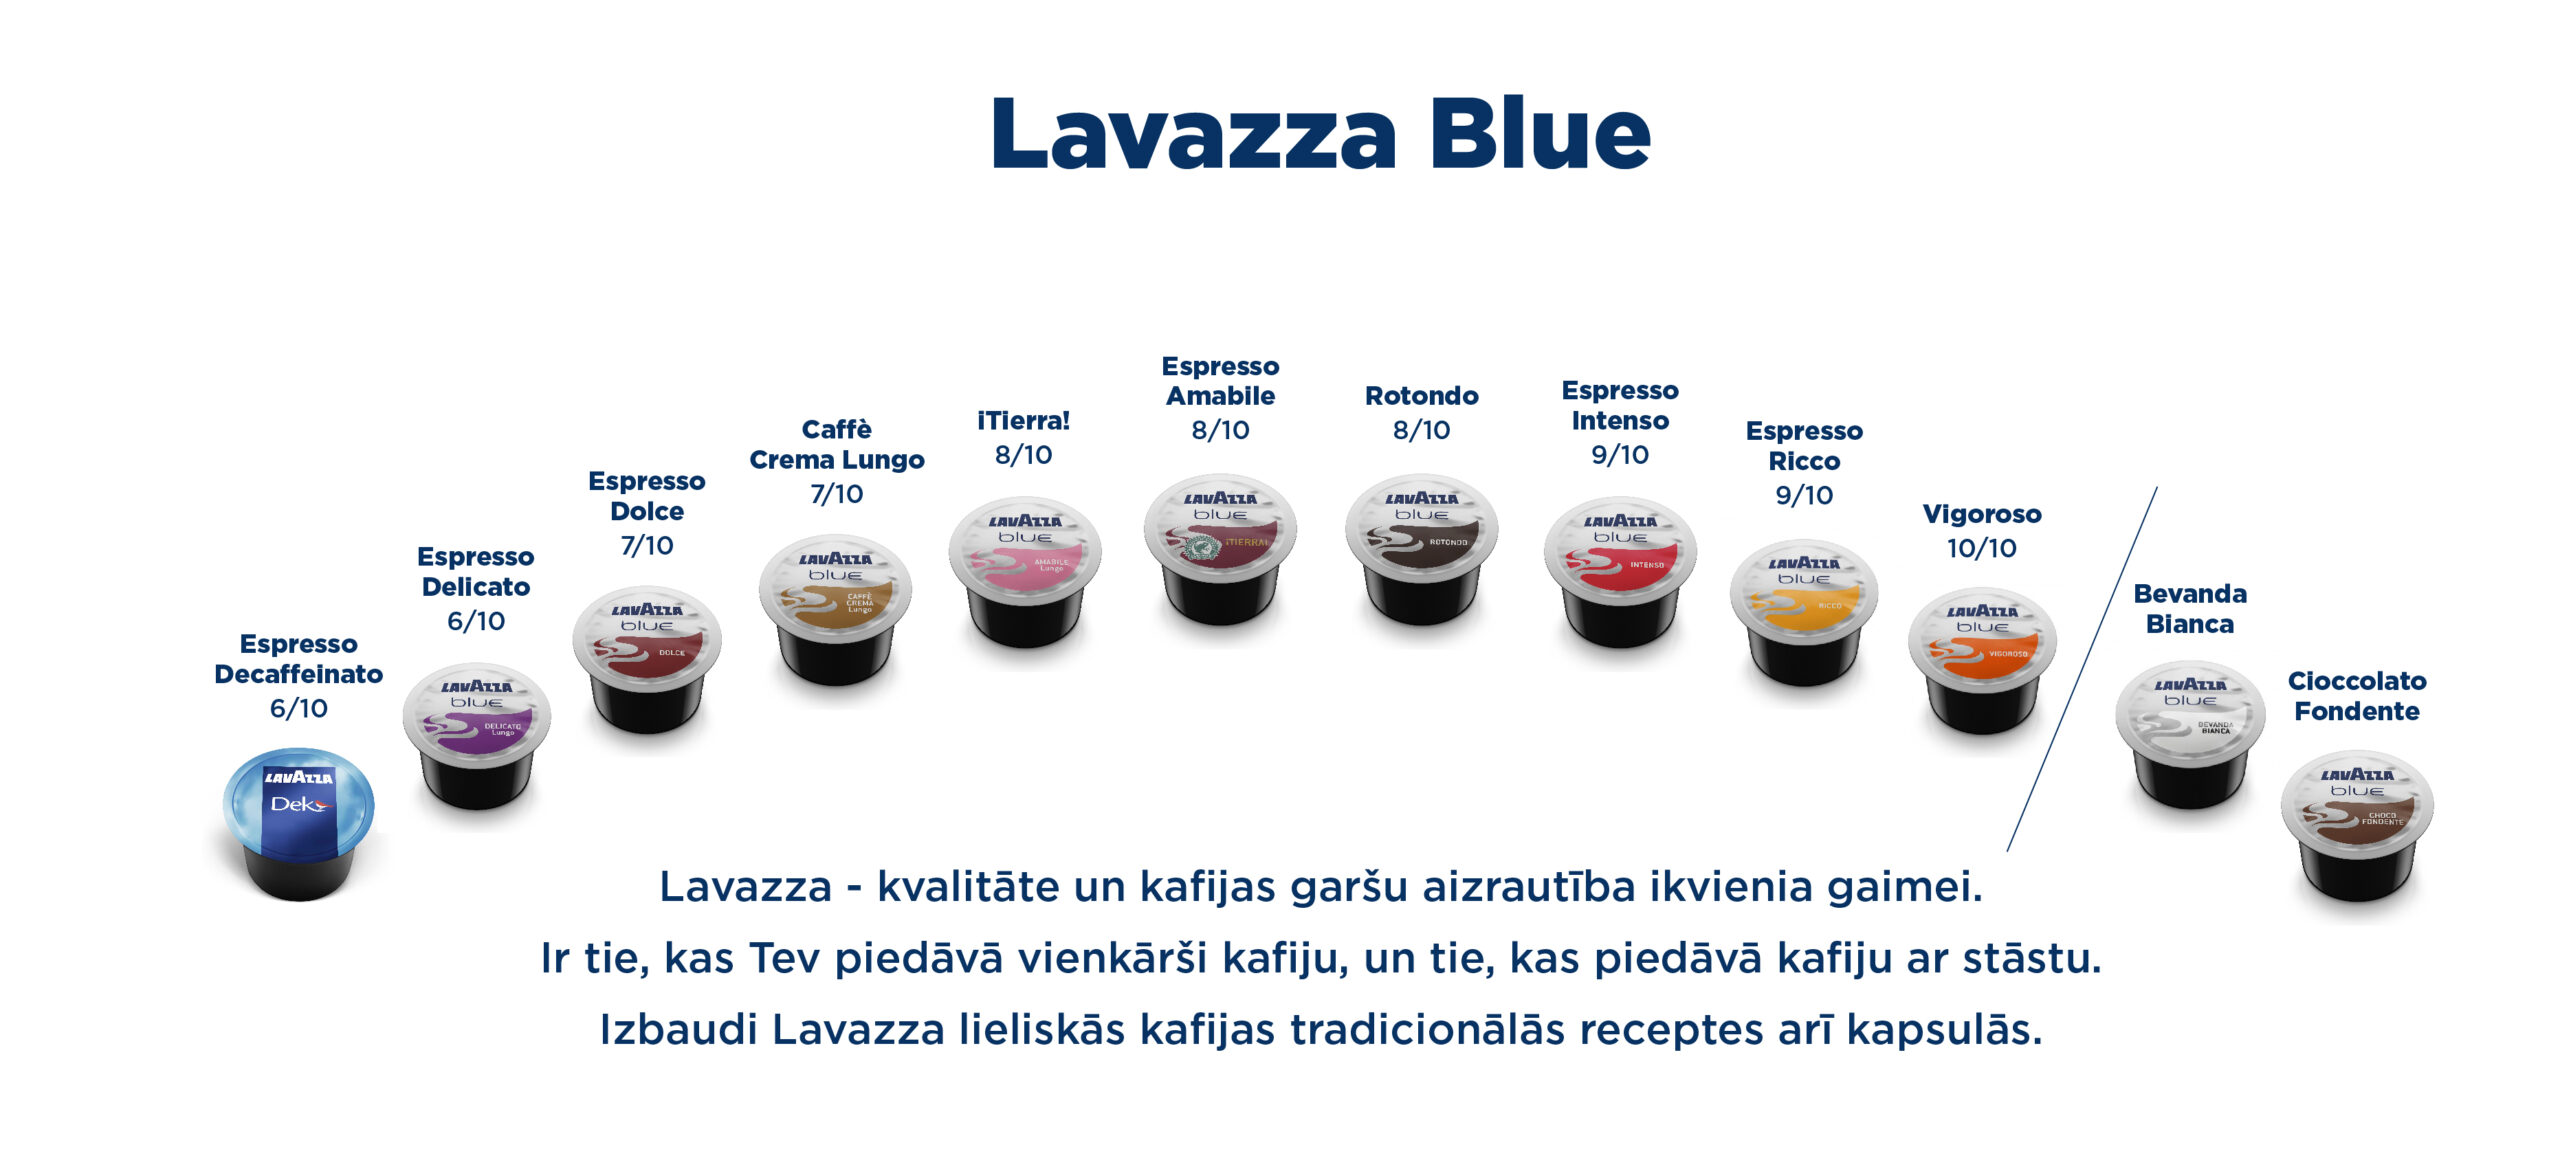 Lavazza Blue kafijas kapsulas